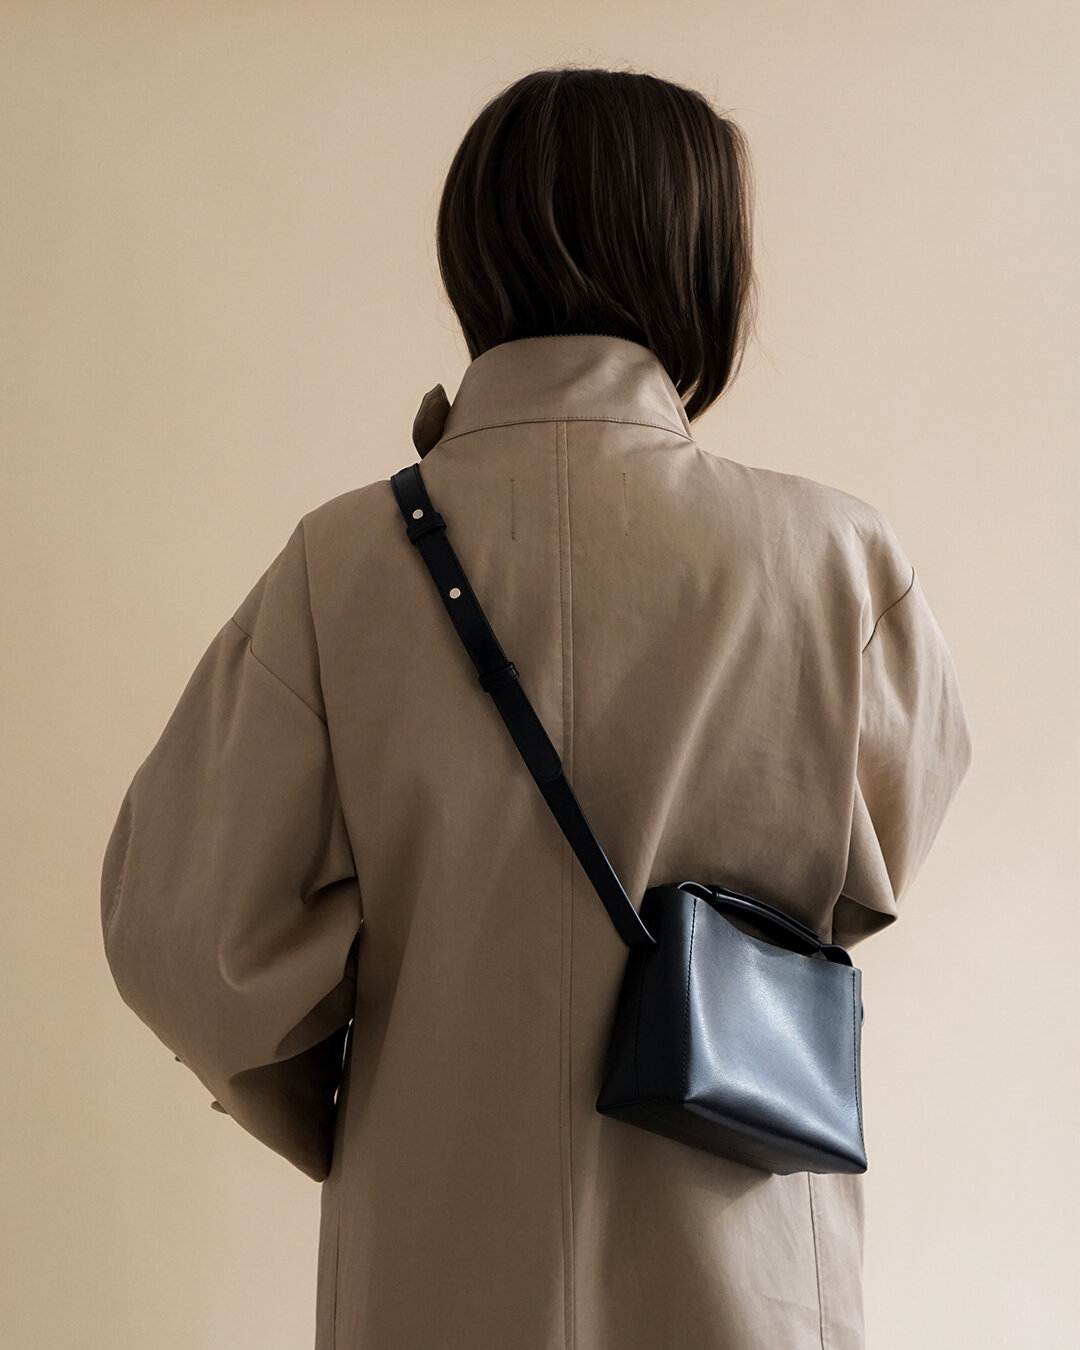 Luxury Polyester Handle Mini Bag Purse Handbag Small Shoulder Crossbody Tote  Bag | eBay